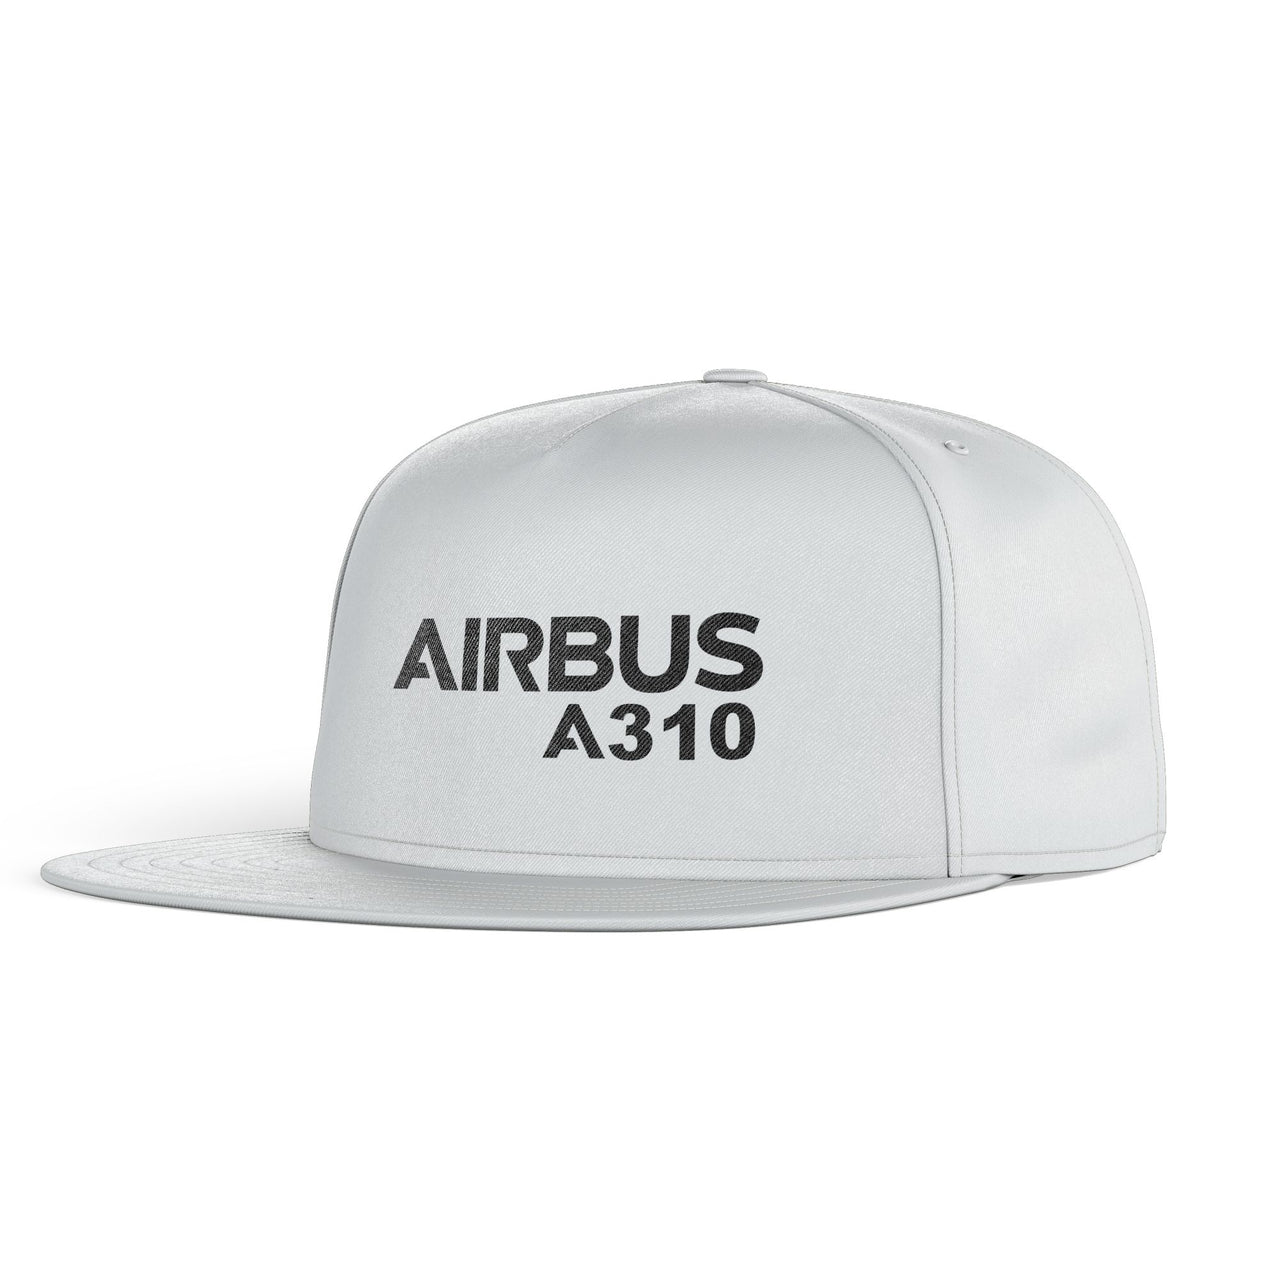 Airbus A310 & Text Designed Snapback Caps & Hats